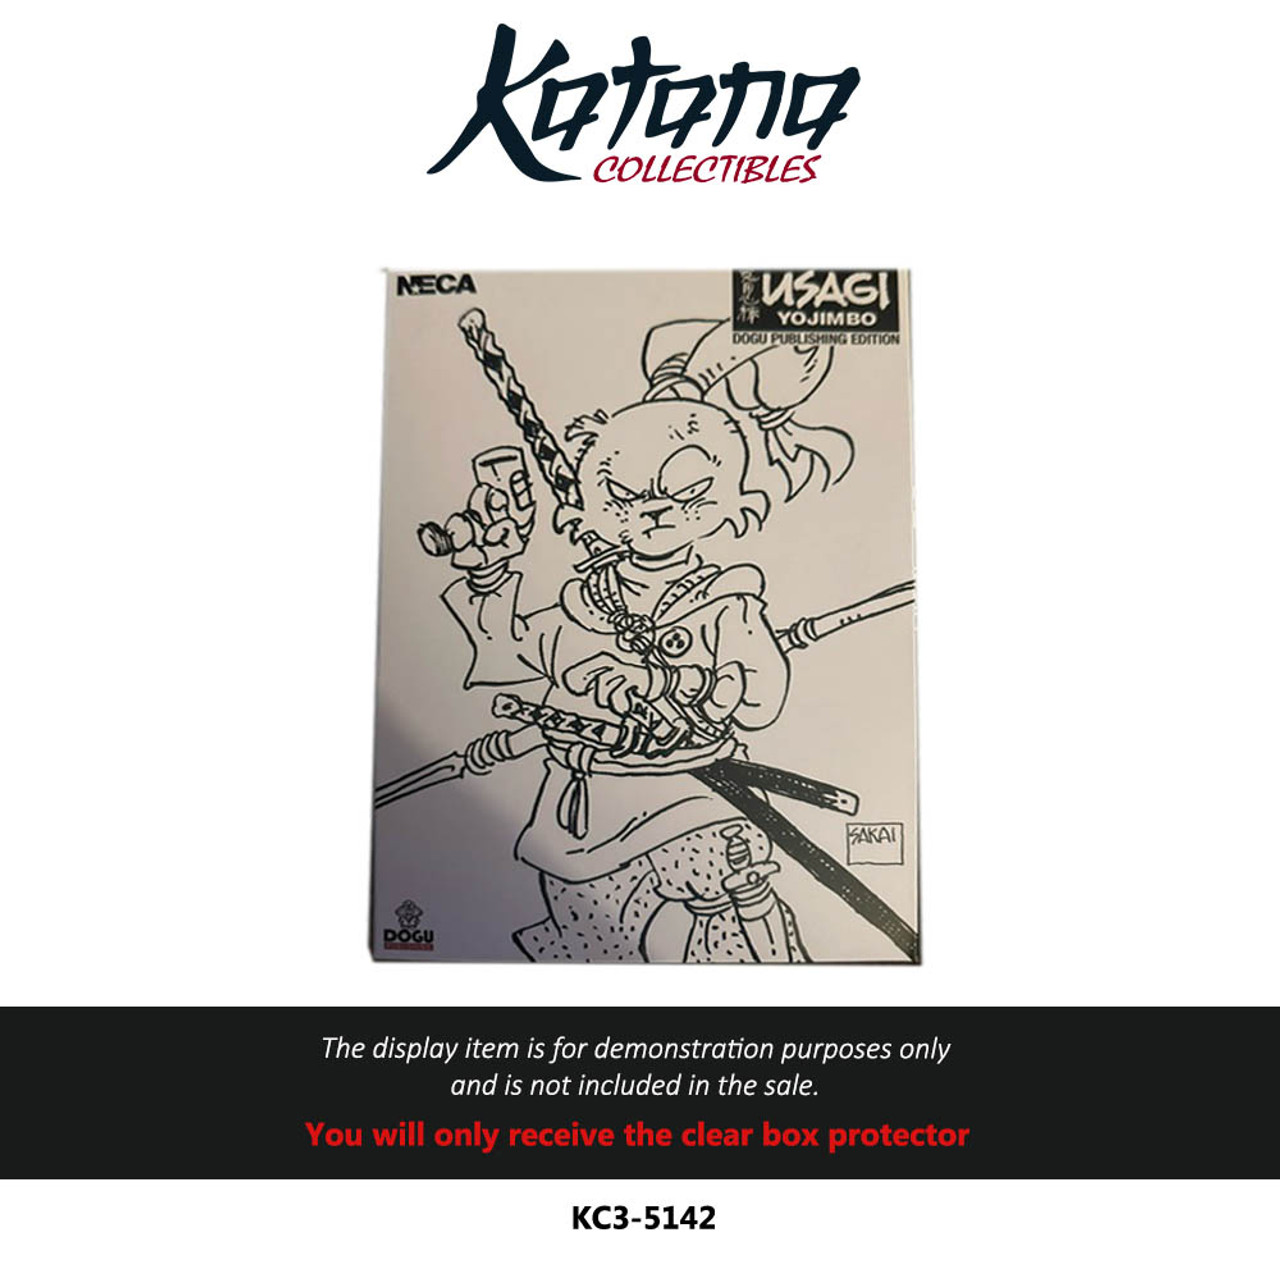 Katana Collectibles Protector For Usage Yojimbo in Space